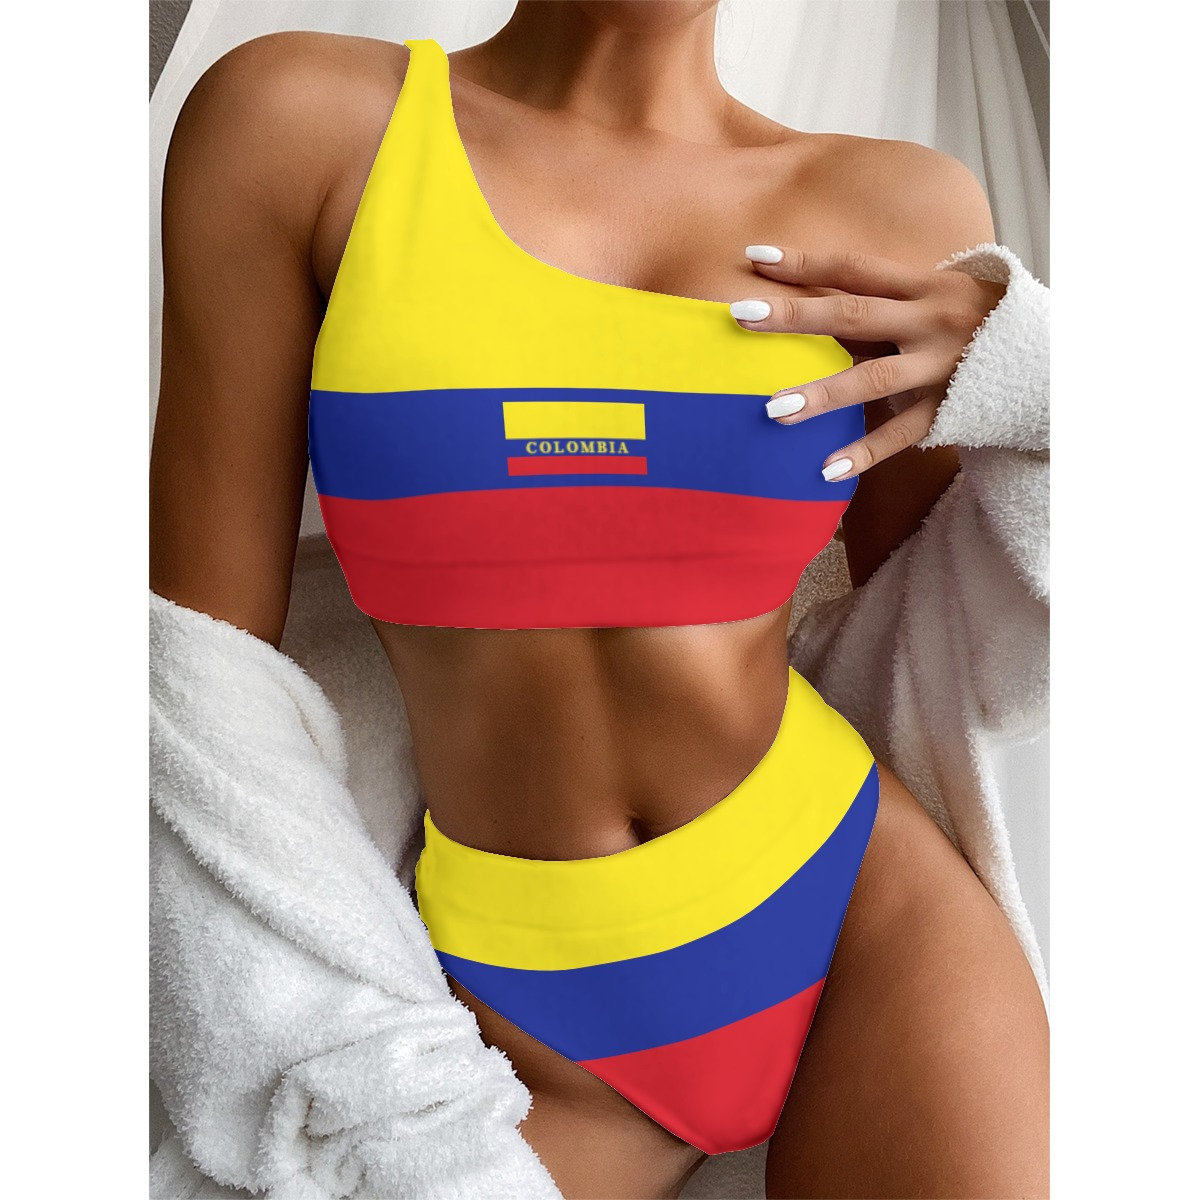 Colombian Women's Bikini, Colombia, Flag, Women, Ladies, Teens, Girls,  Gifts, Print, Flags, Beach Wear, Sports, Bogota, Outfit, Design. 